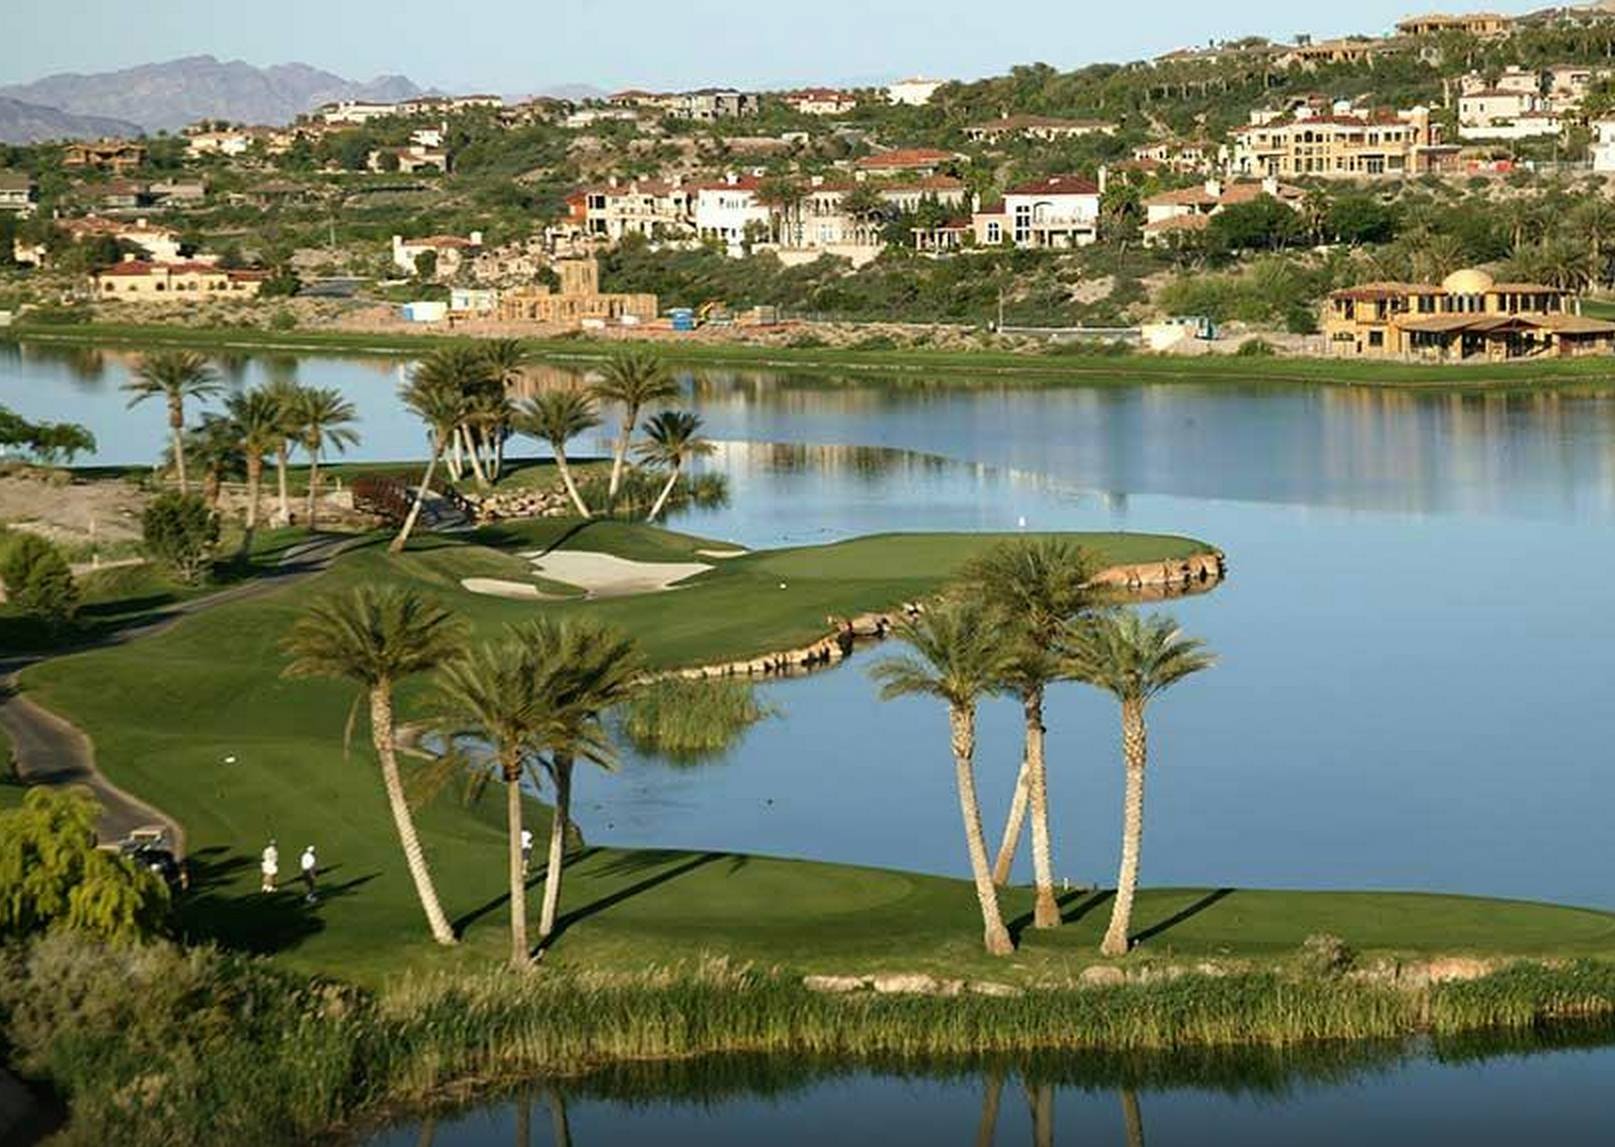 Las Vegas Golf Update: Golf Course Conditions